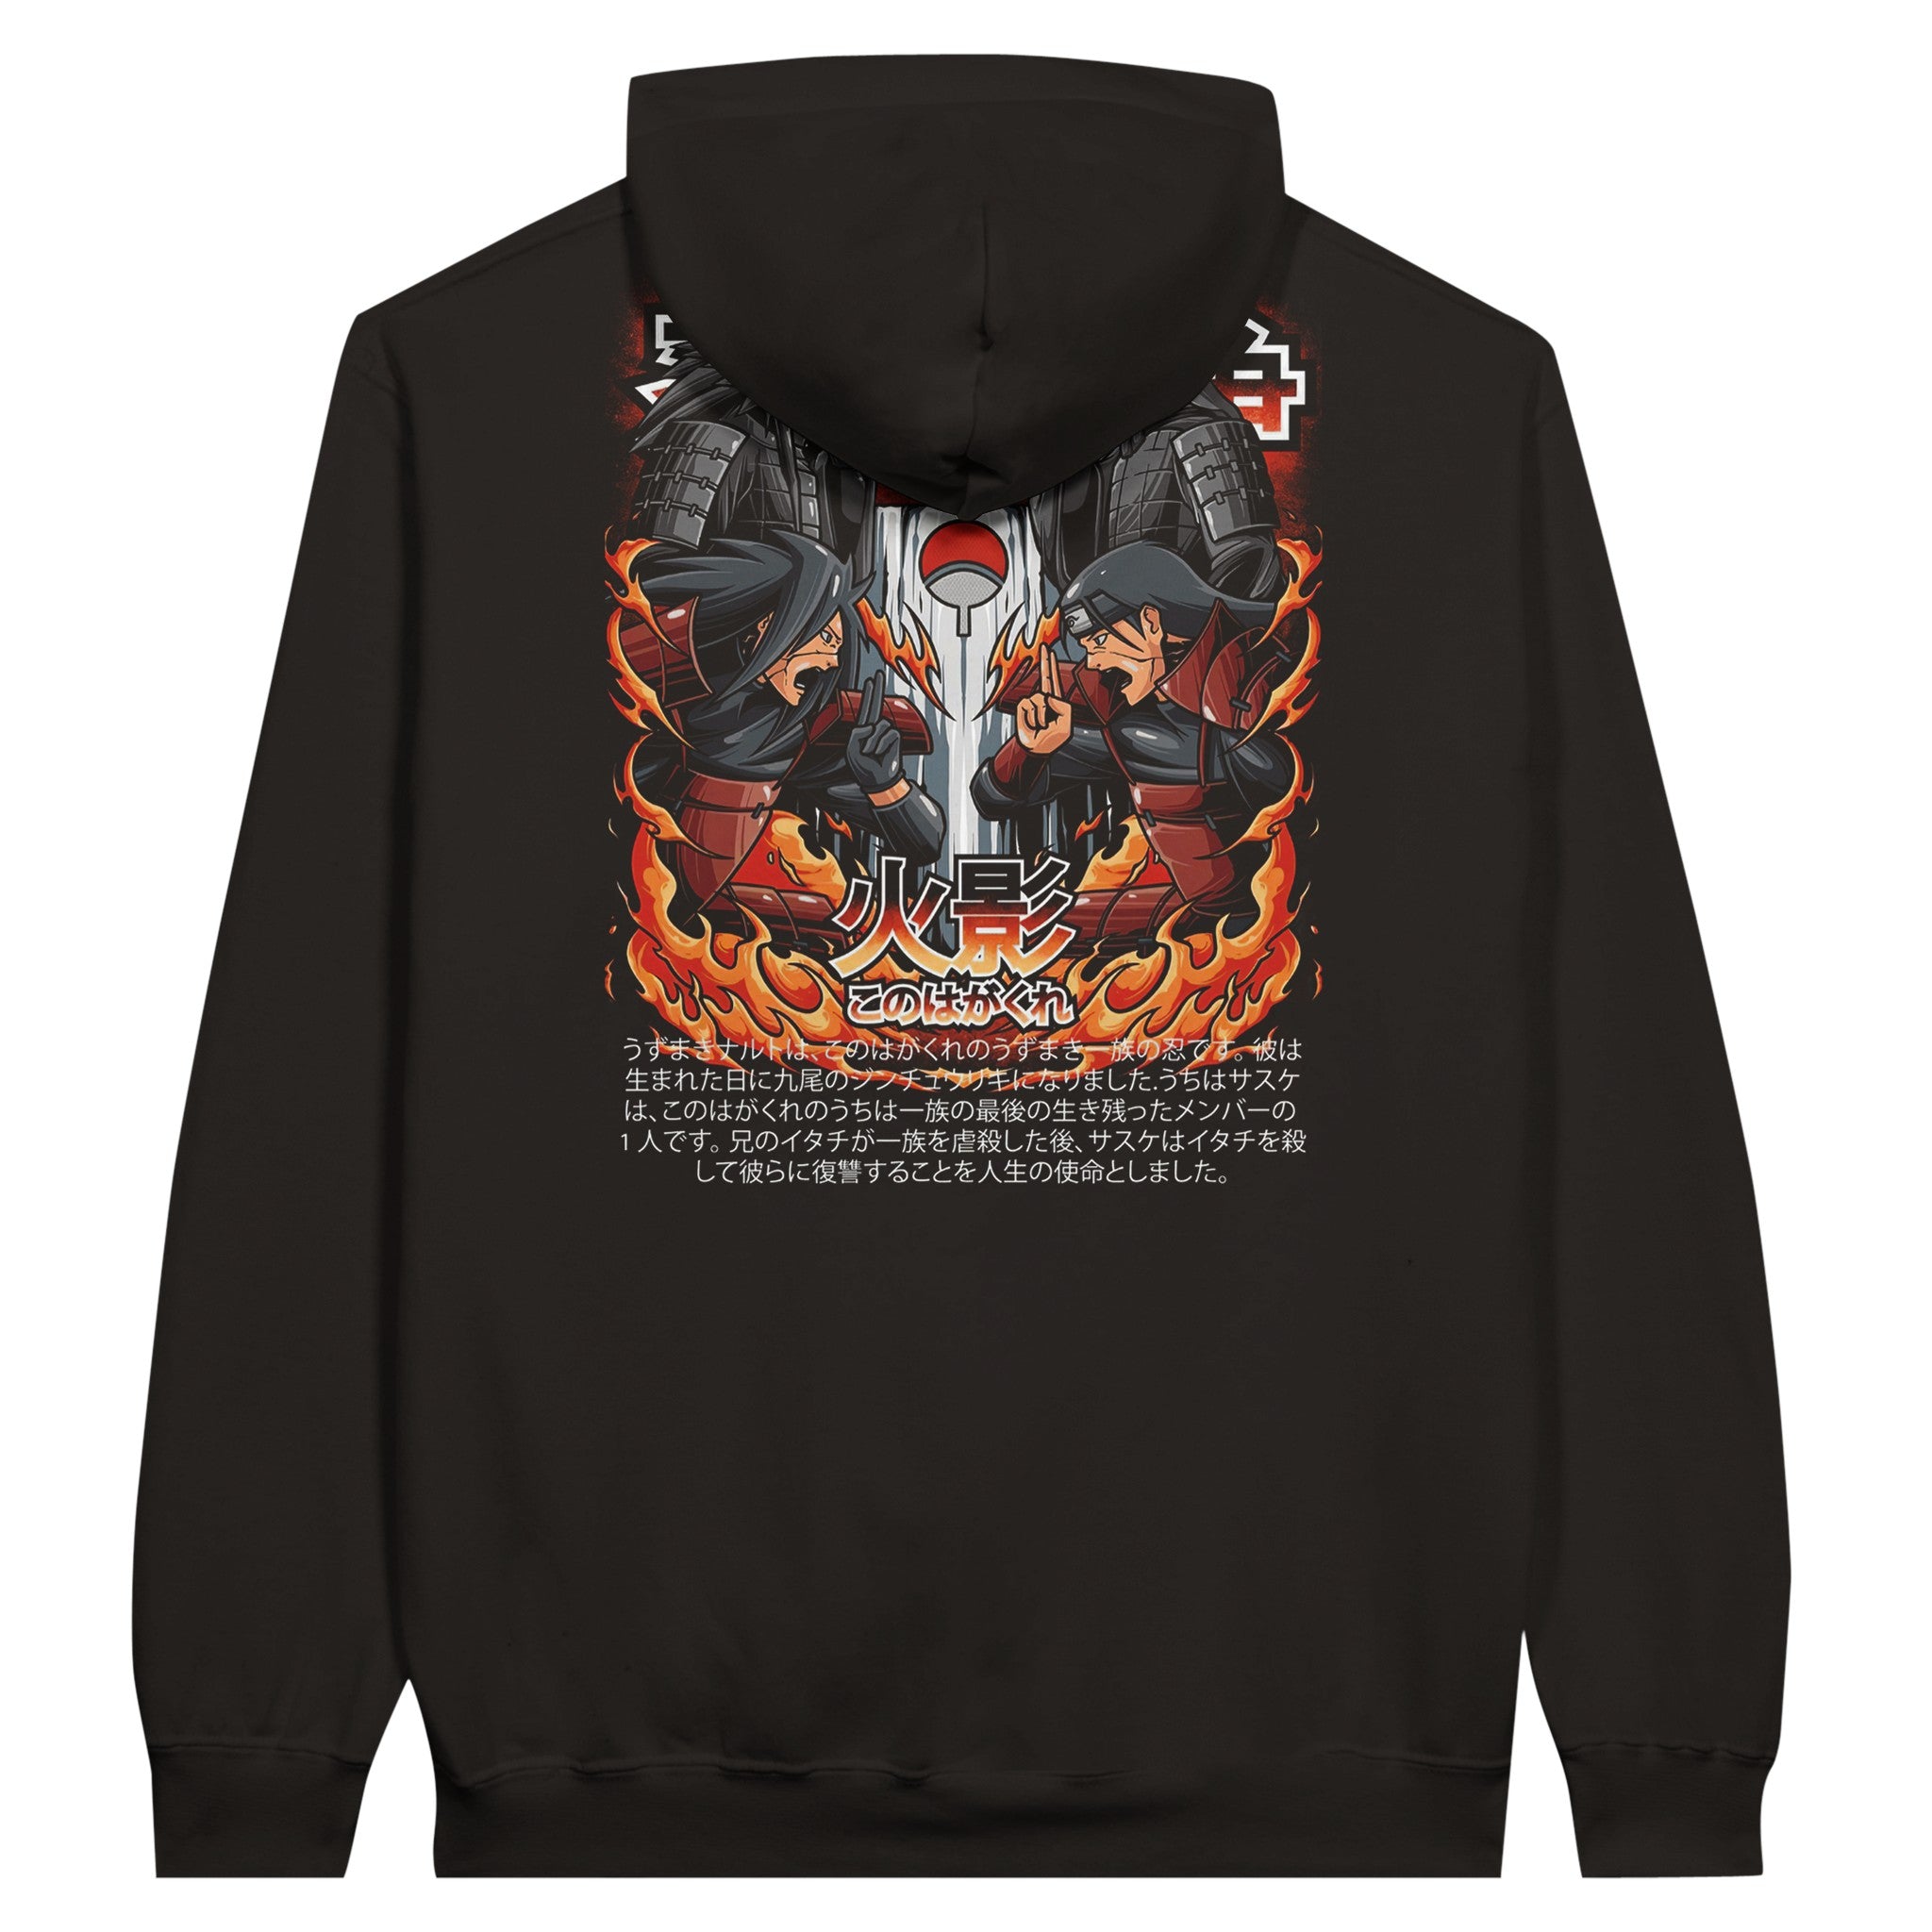 shop and buy madara vs hashirama anime clothing hoodie